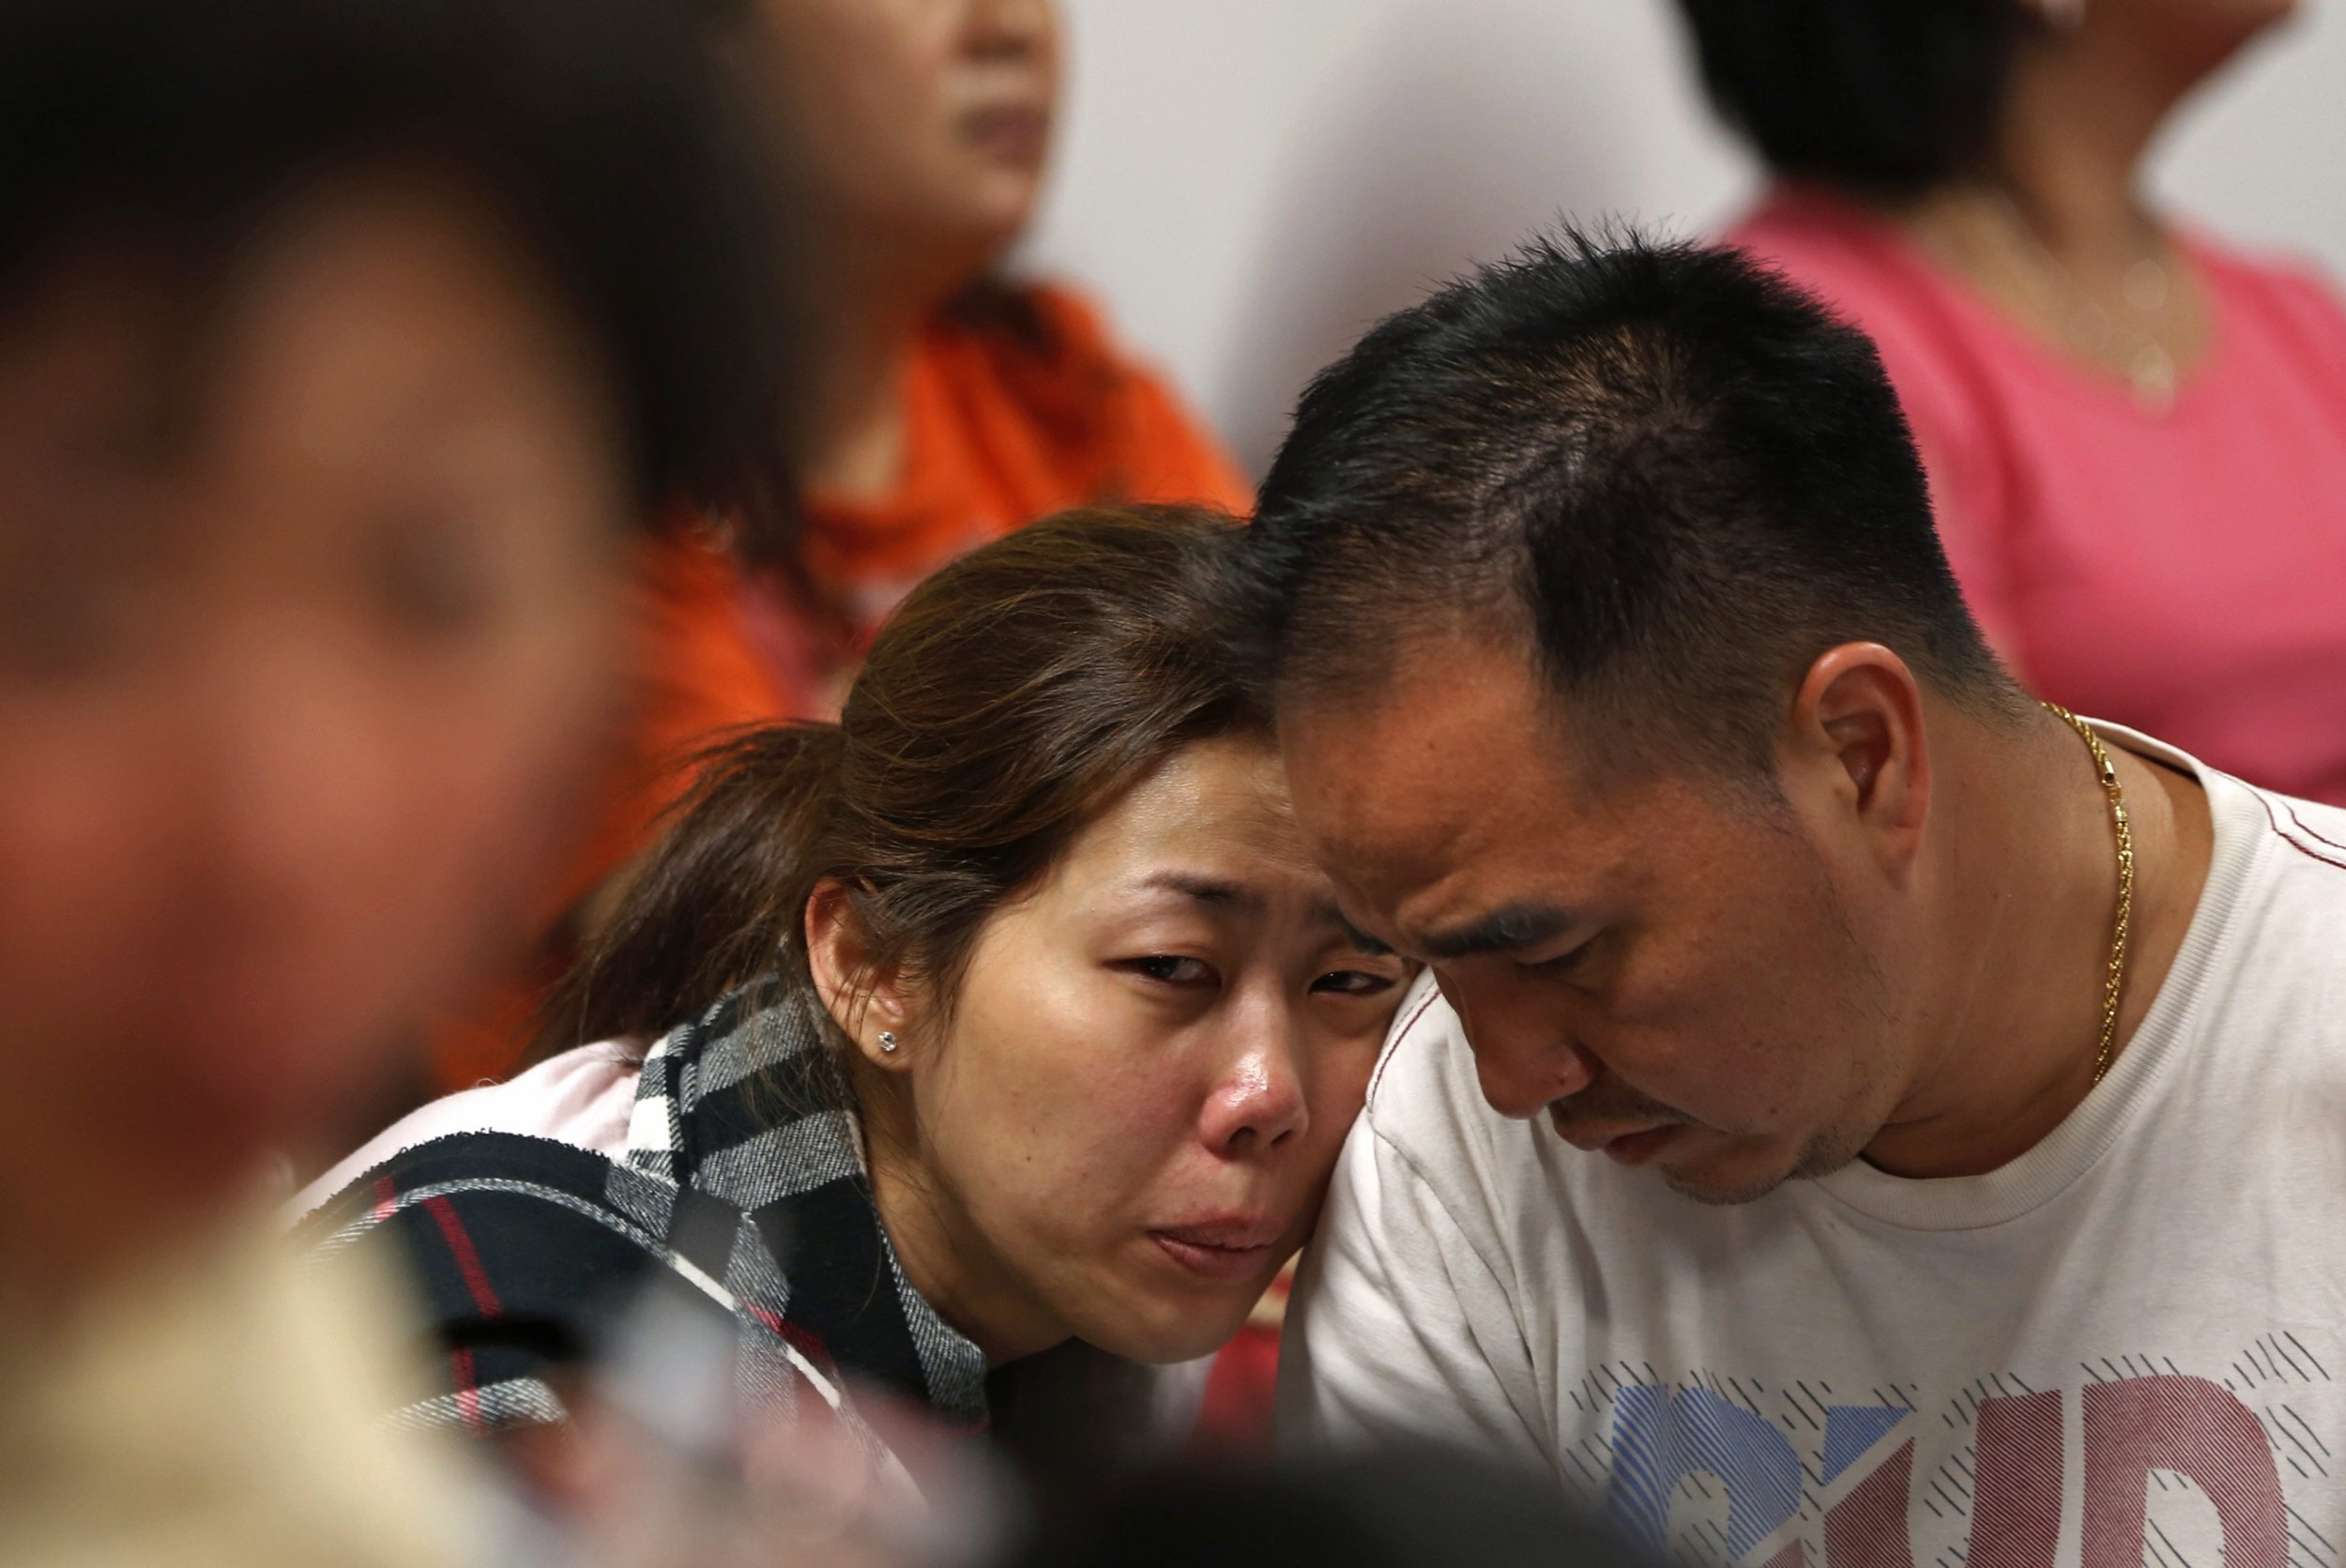 QZ8501-Loved Ones 1-Dec. 28, 2014